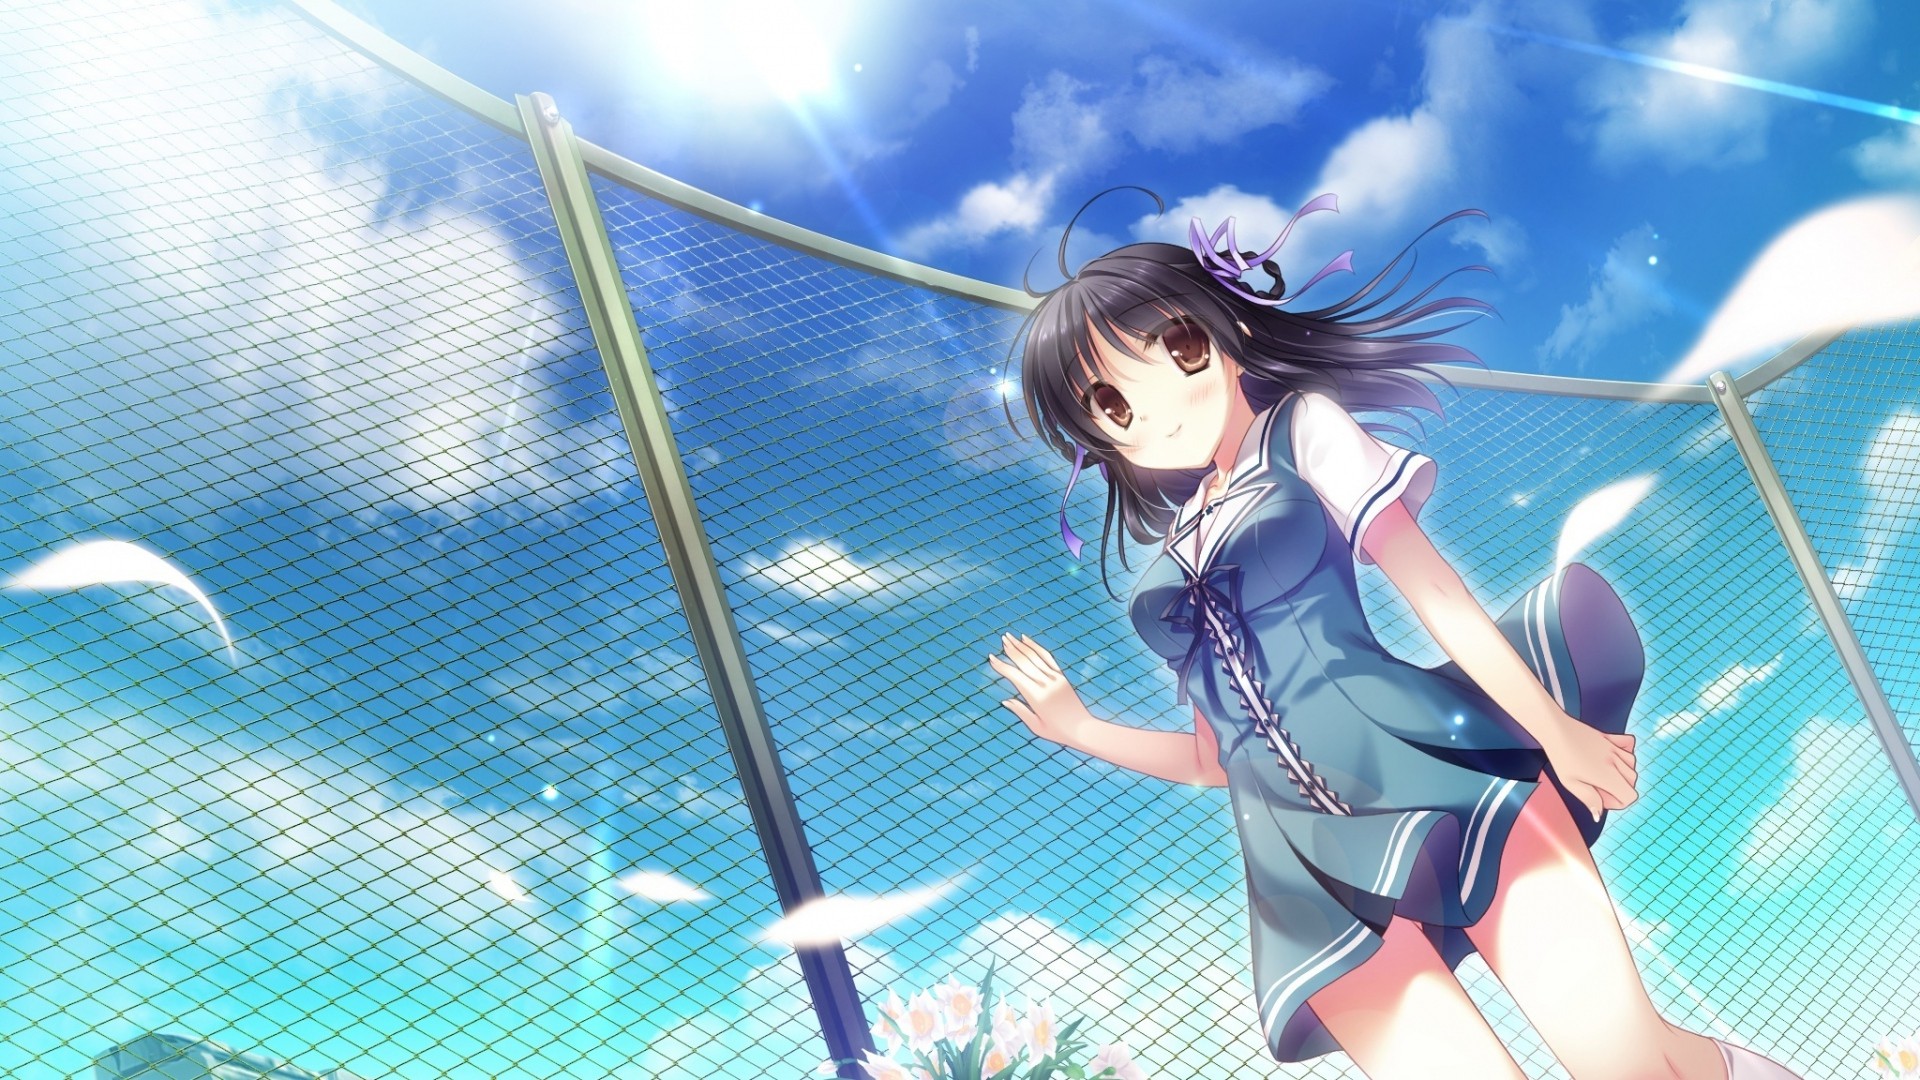 Anime 1920x1080 anime anime girls brown eyes dress sky fence thighs blue dress women outdoors smiling dark hair